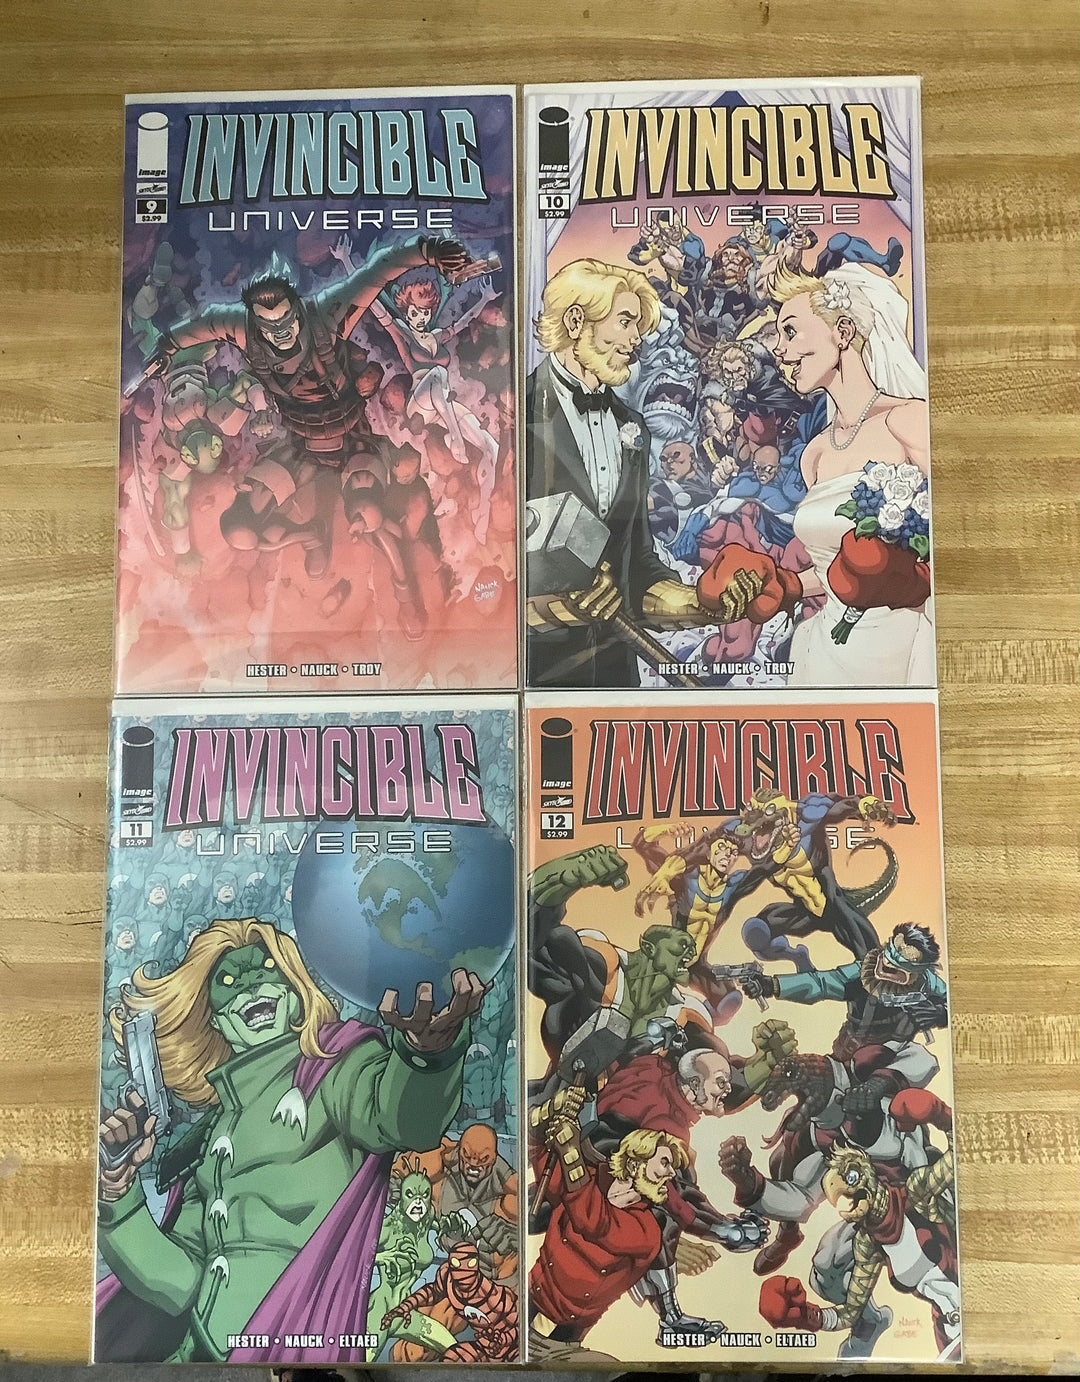 Lot of 12 Invincible Universe Image Comic Books #1-#12 Complete Series Set